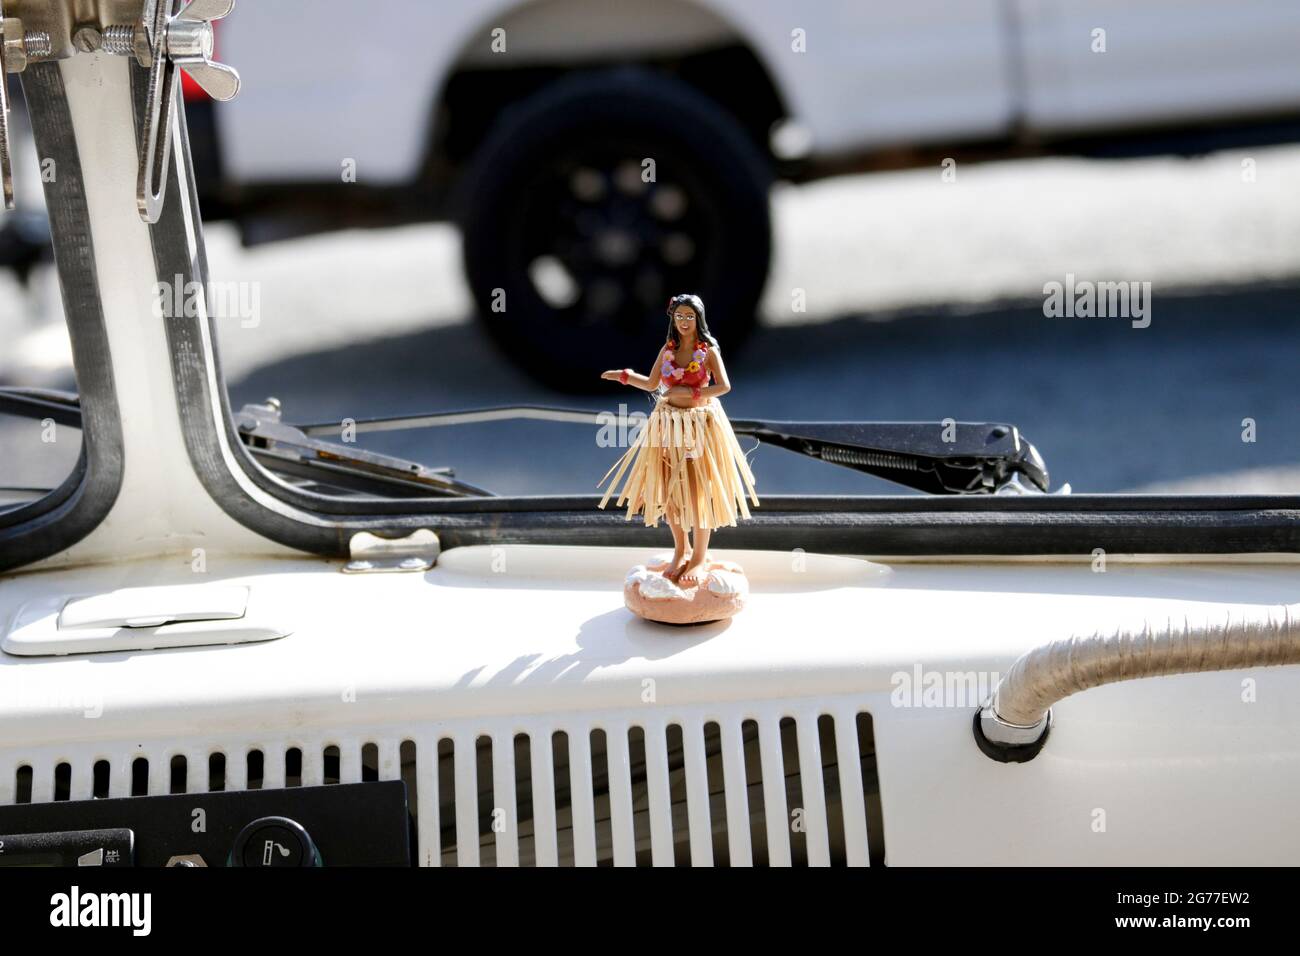 Hula Dancer Doll on VW Bus Dashboard Stock Photo